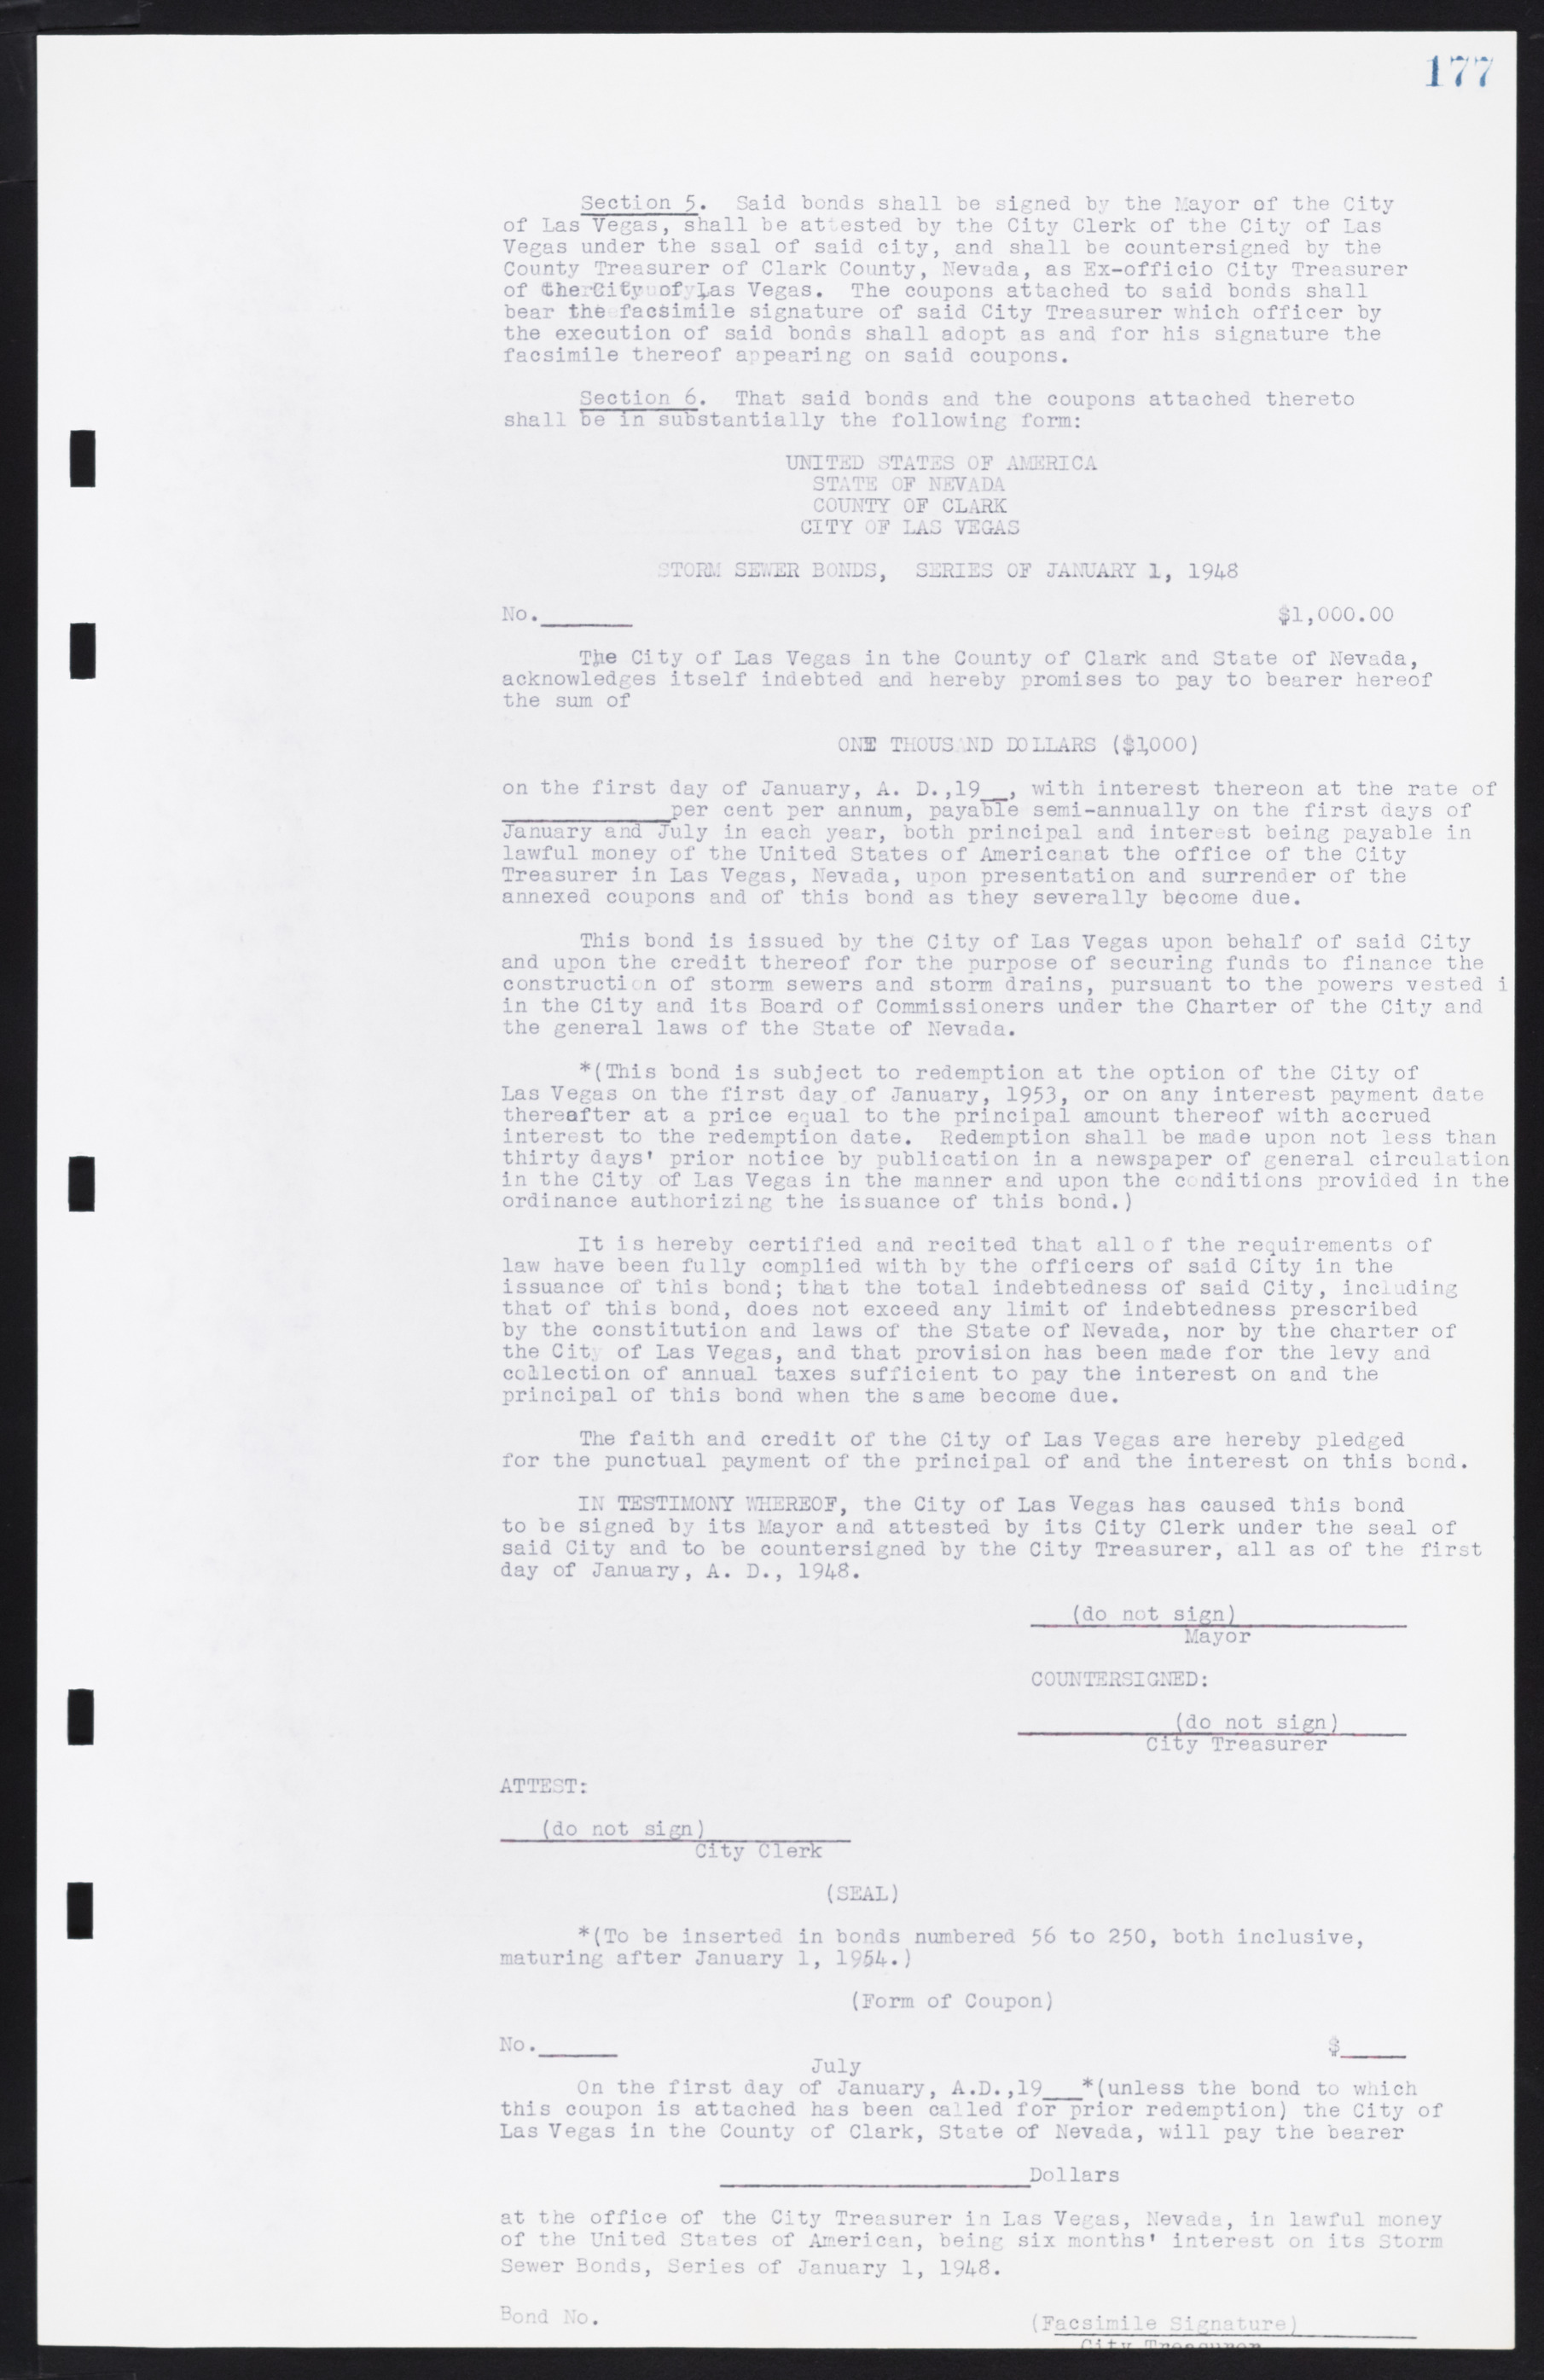 Las Vegas City Commission Minutes, January 7, 1947 to October 26, 1949, lvc000006-197